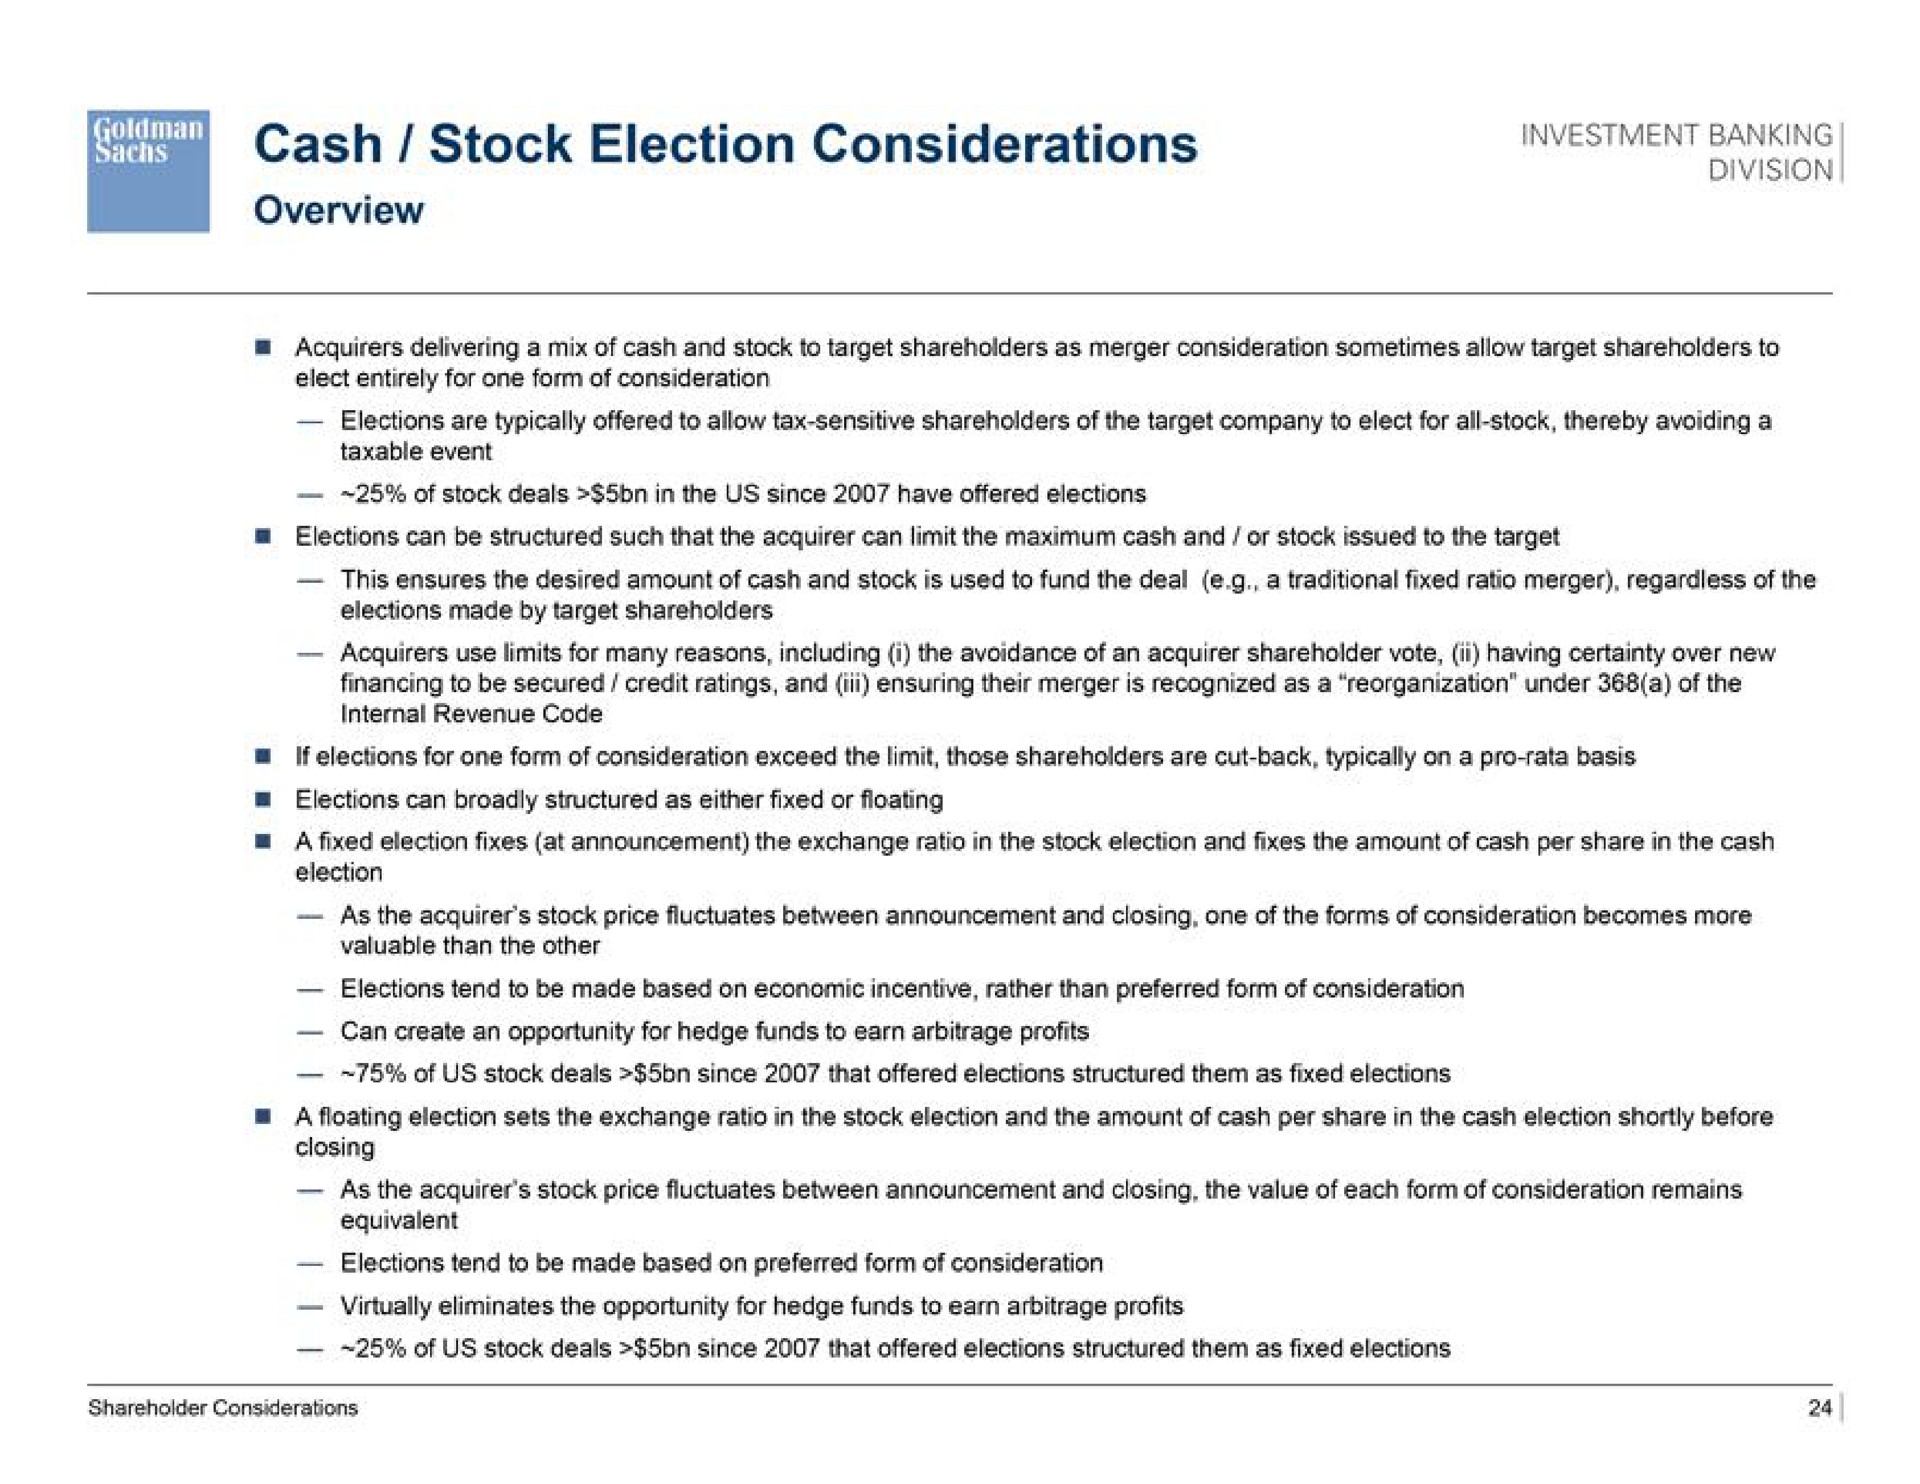 cash stock election considerations | Goldman Sachs